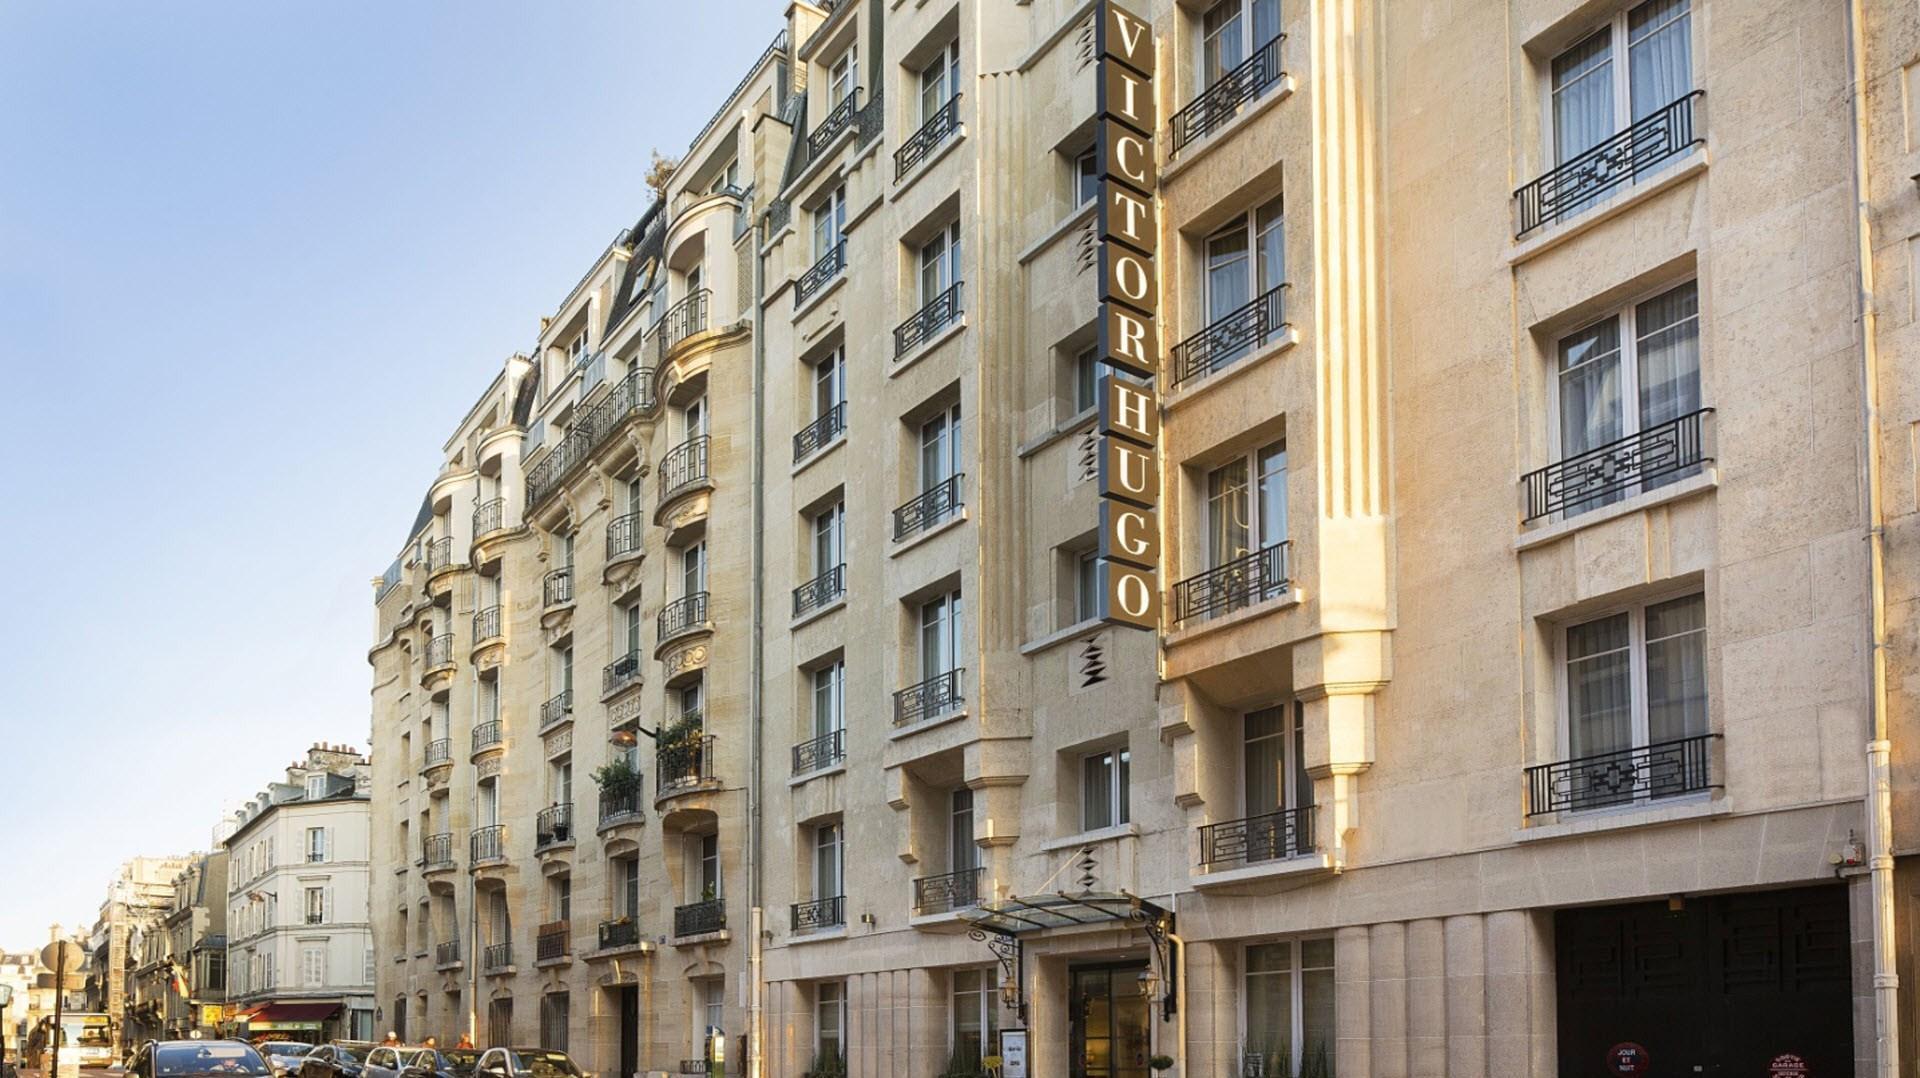 Hotel Victor Hugo Paris Kleber in Paris, FR